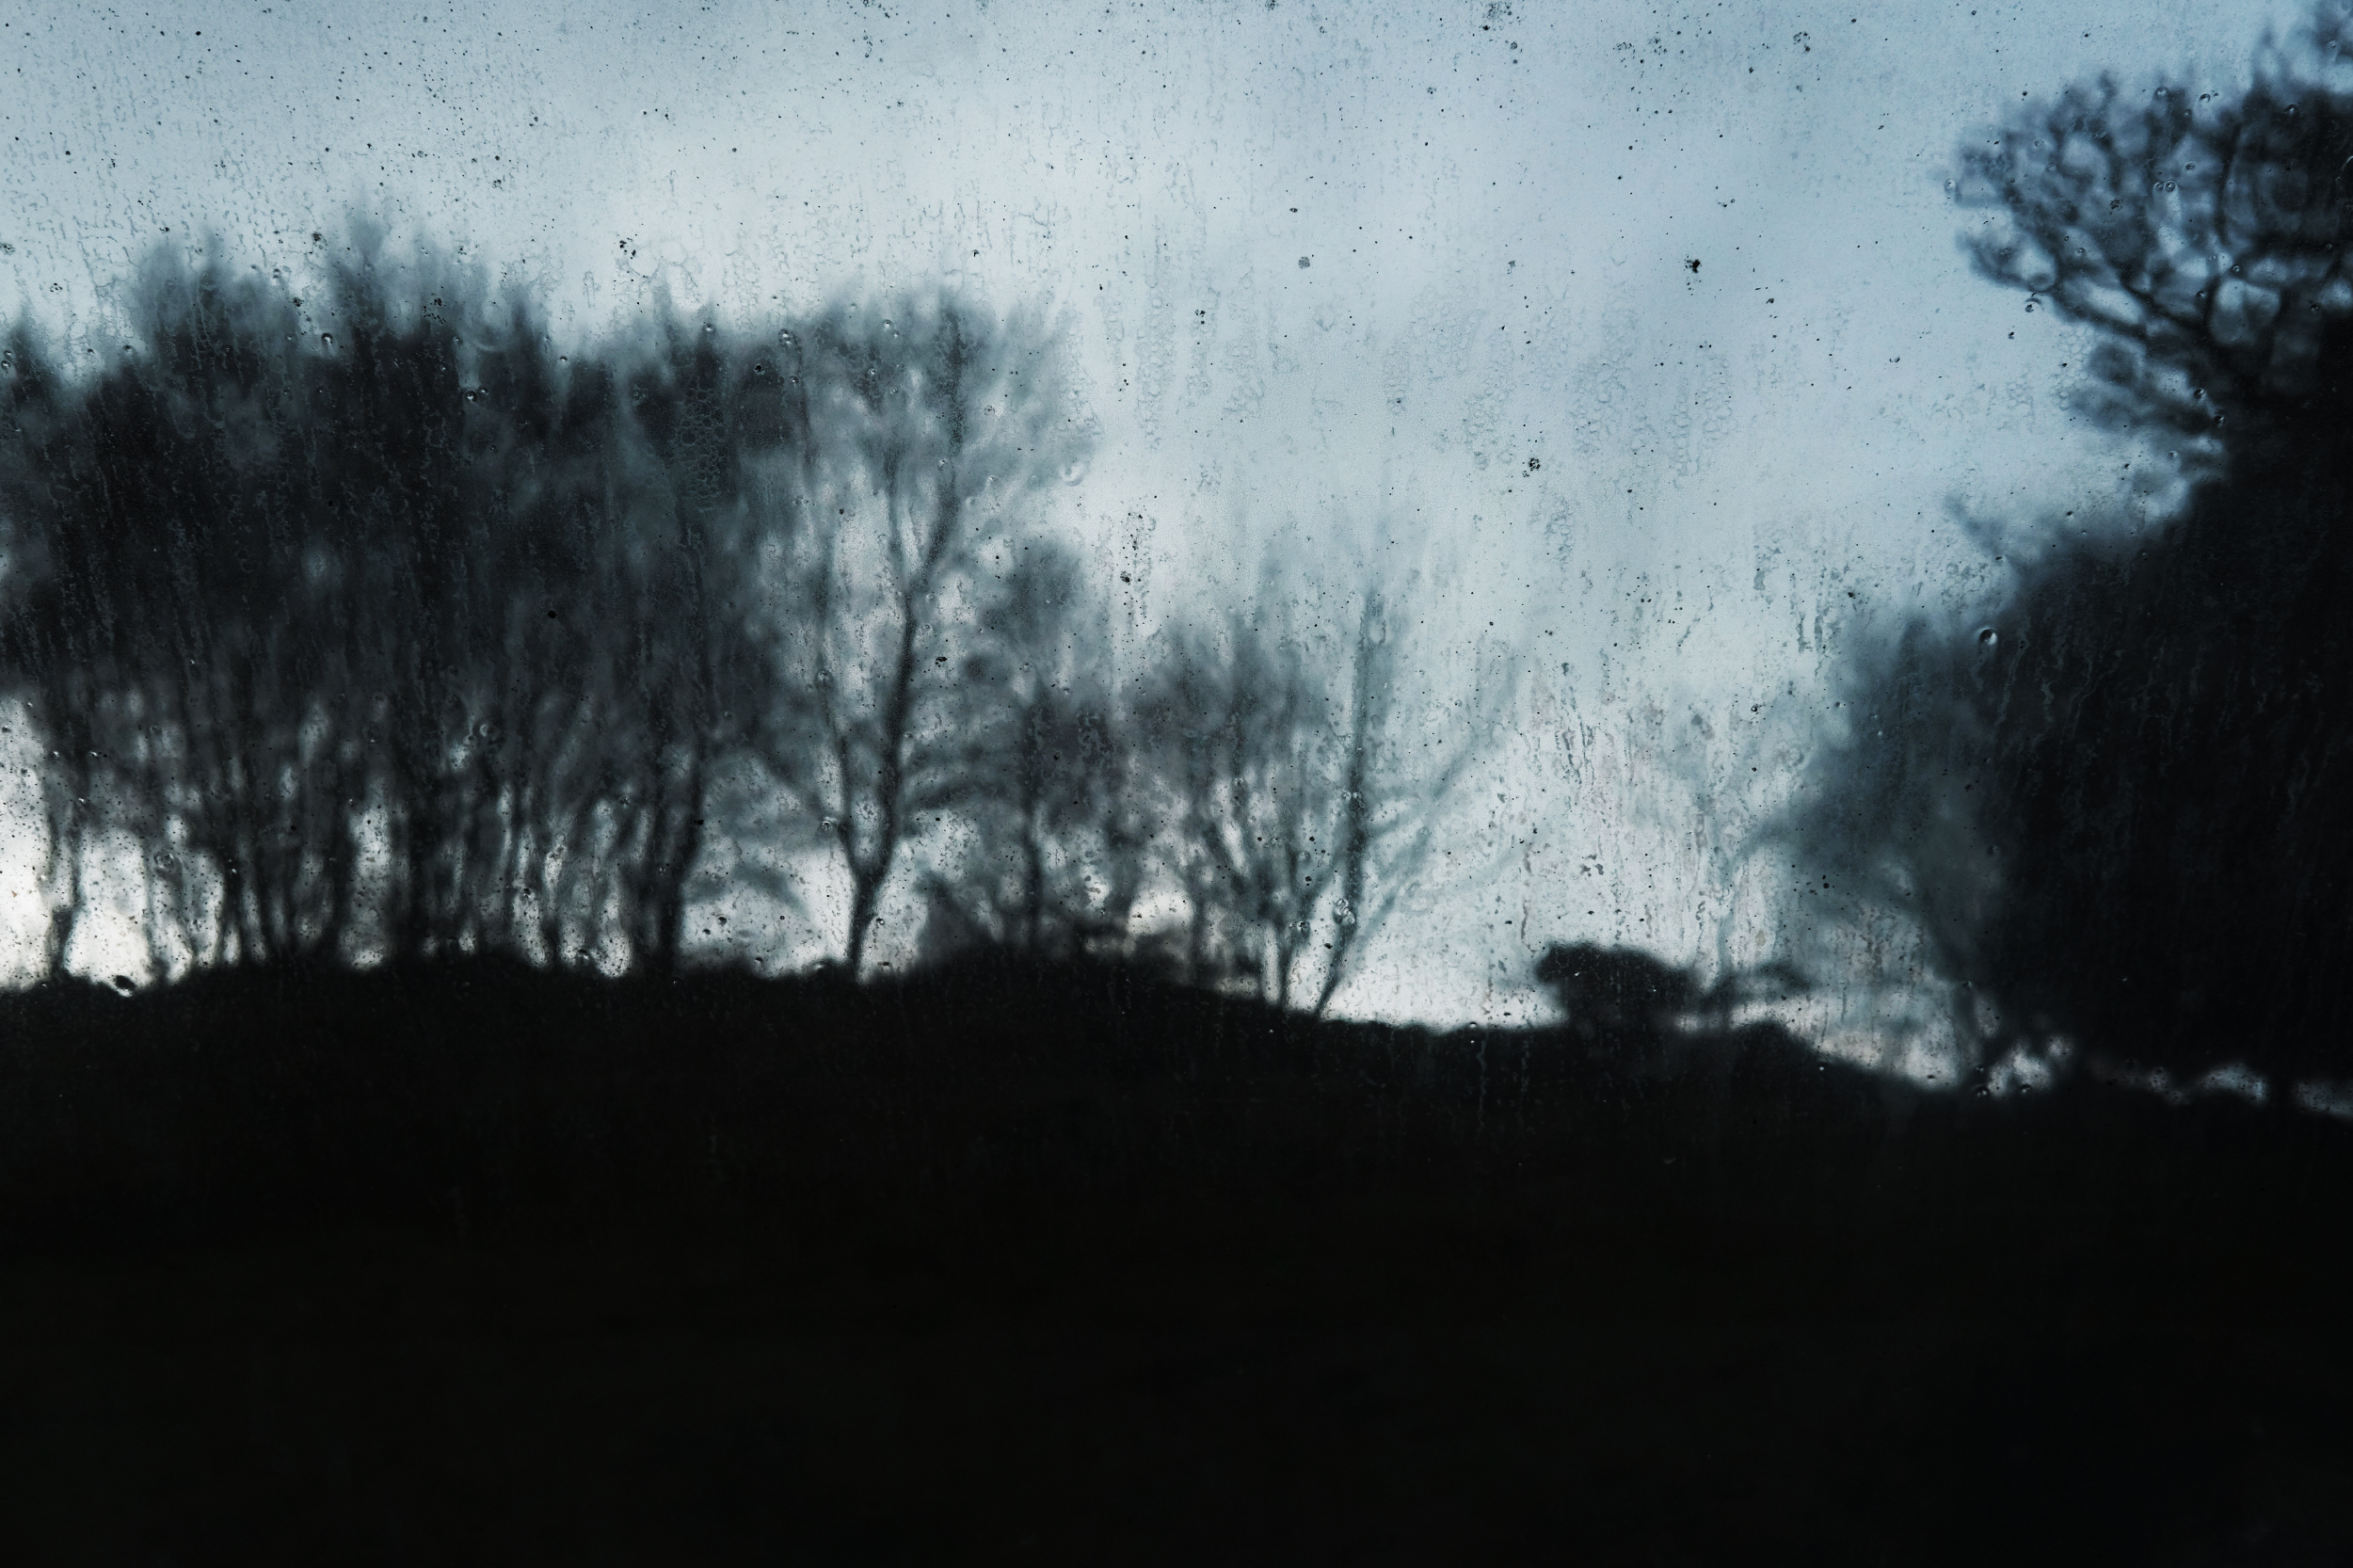  'Winter Trees'&nbsp;Tayvallich, Argyll &amp; Bute. 